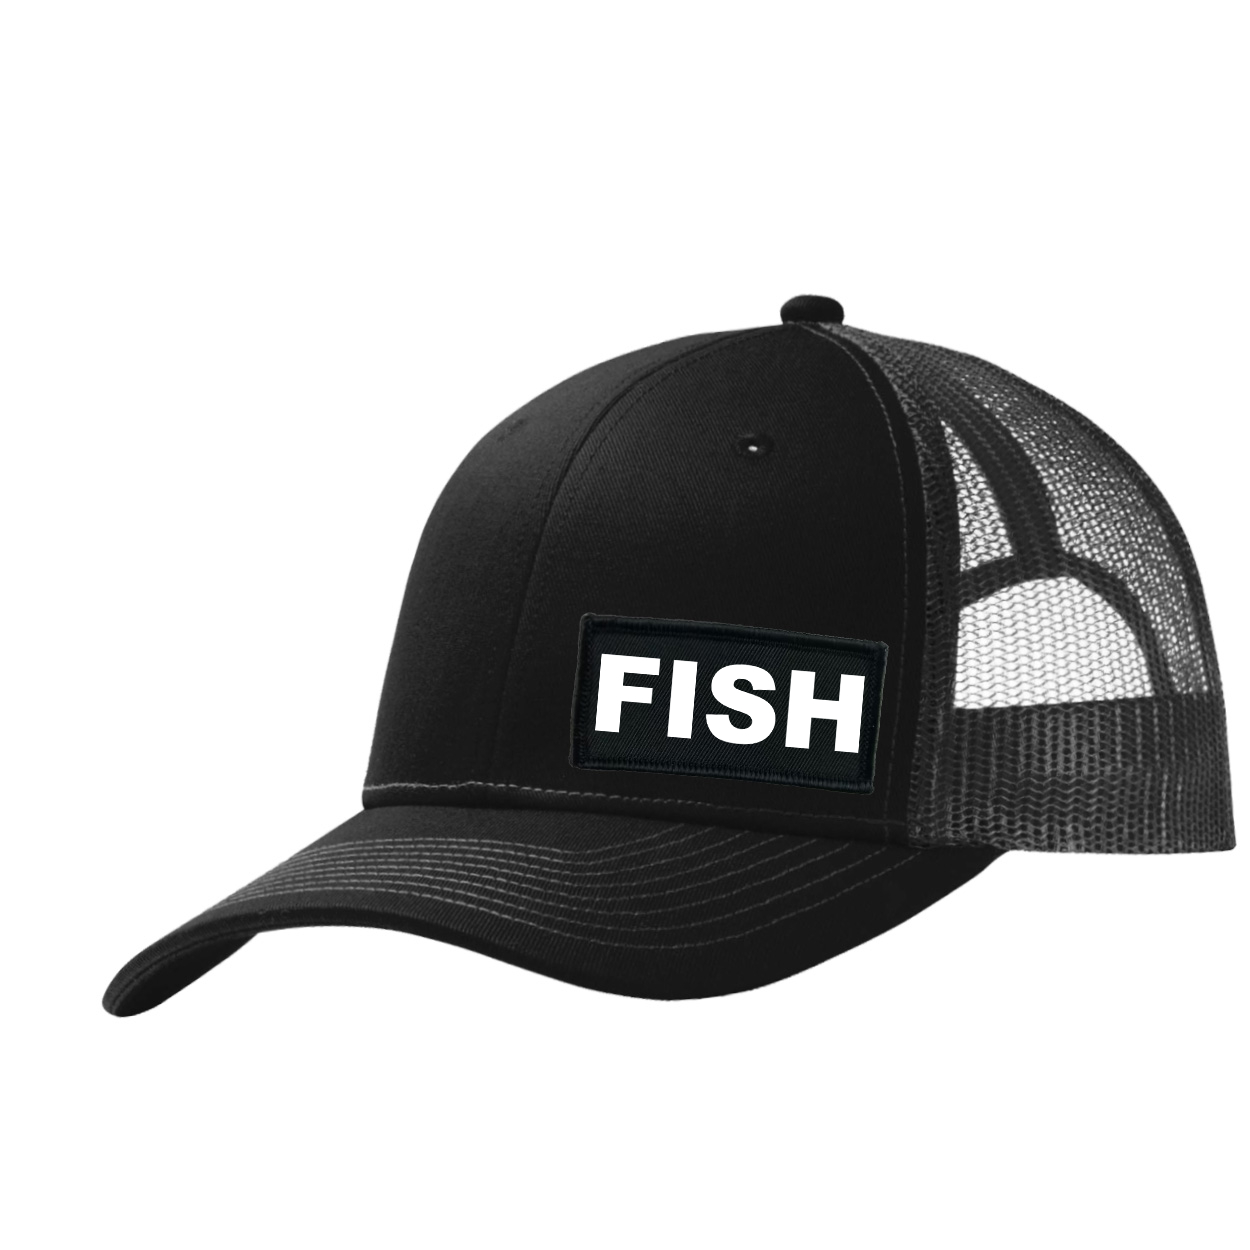 Fish Brand Logo Night Out Woven Patch Snapback Trucker Hat Black/Gray (White Logo)